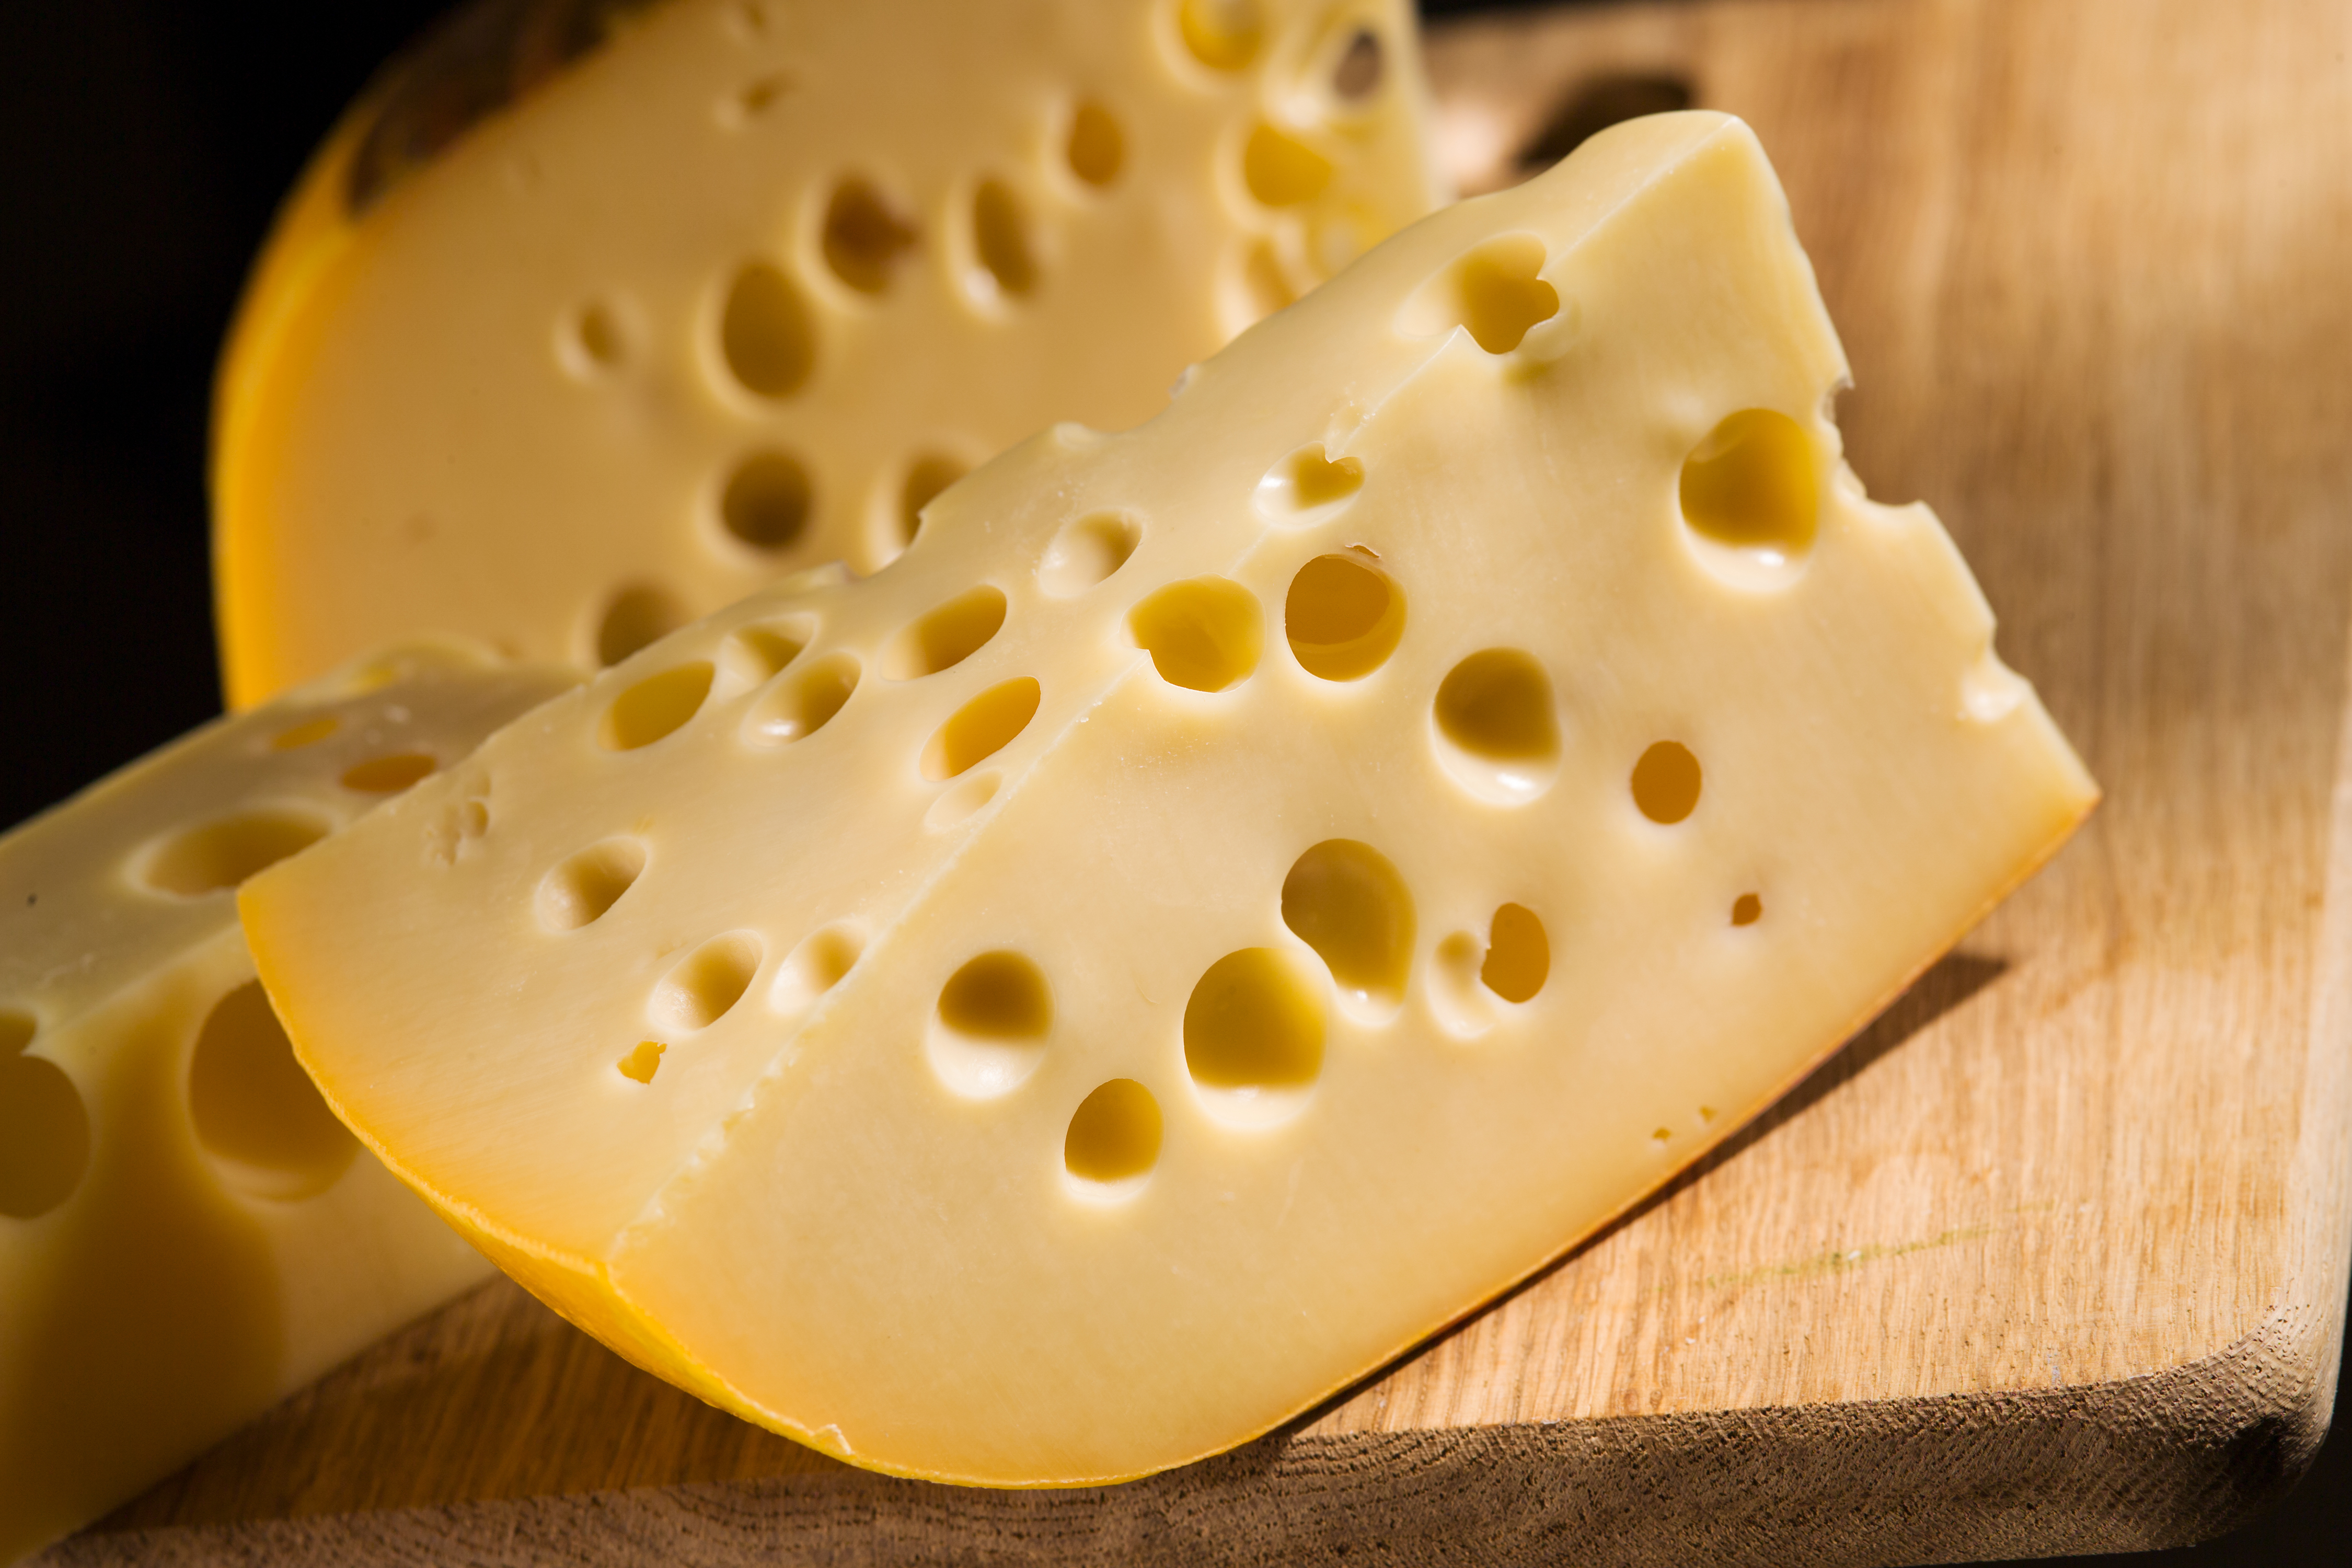 P. Shermanii: The Reason Swiss Cheese Has Holes | Science 2.0 Europe